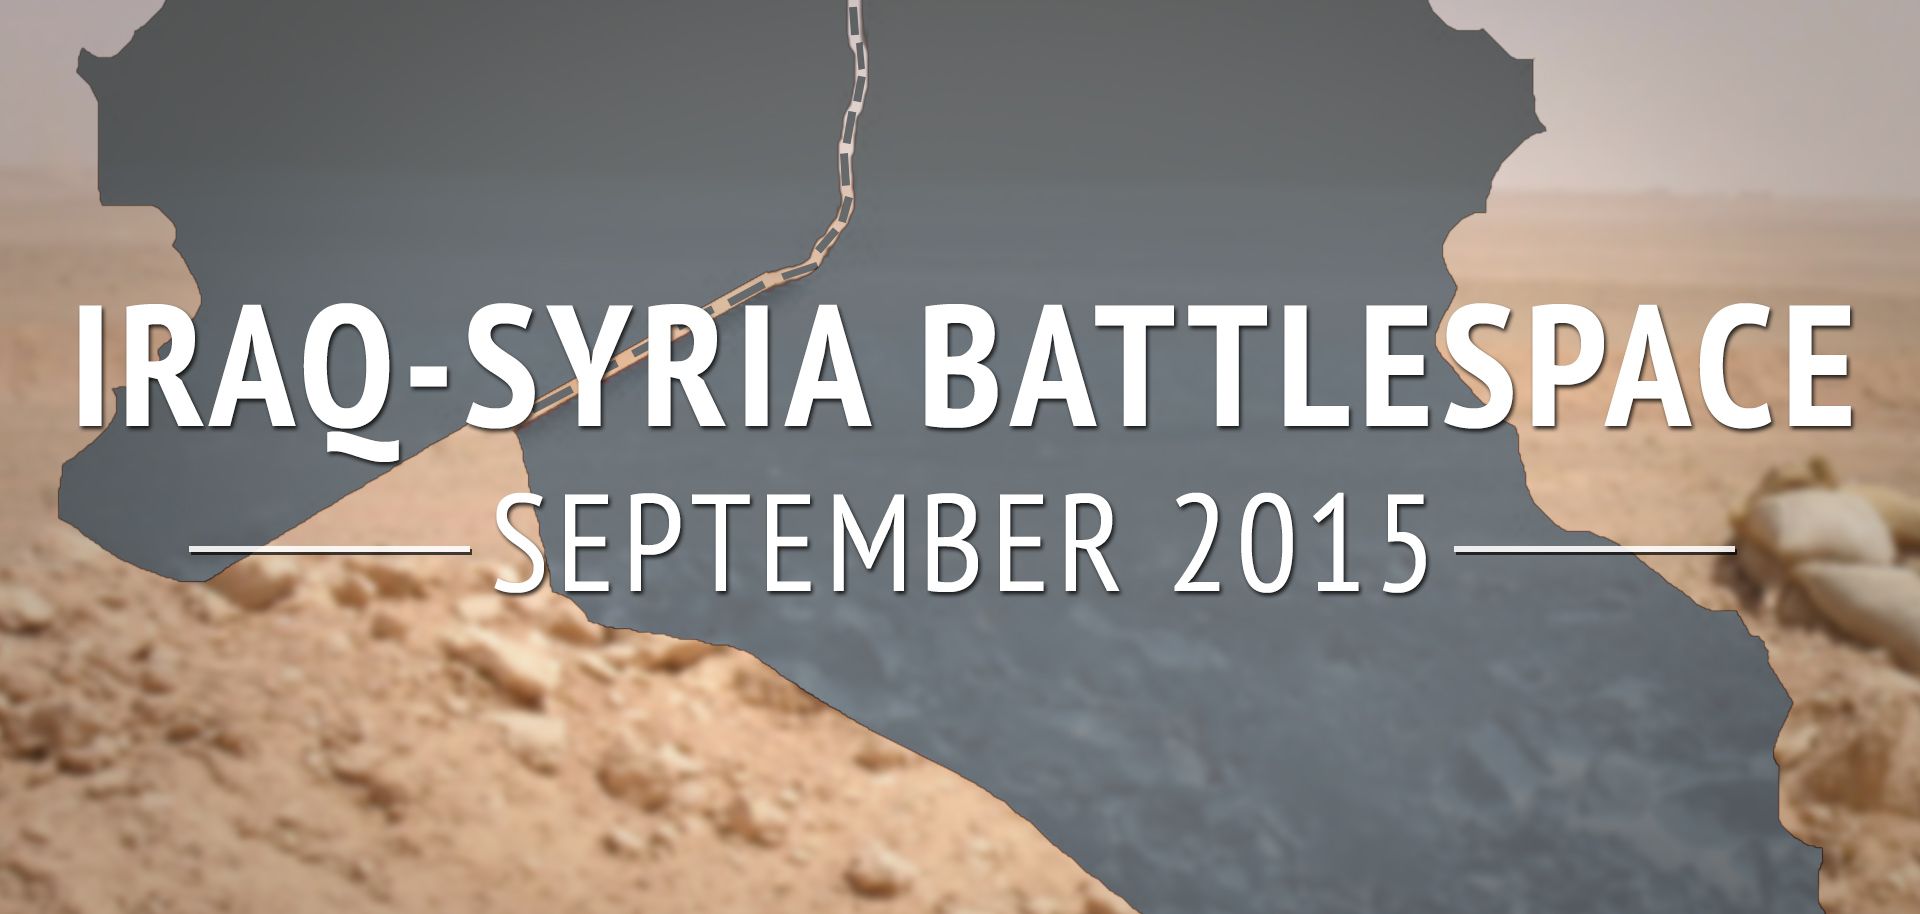 Iraq-Syria Battlespace: September 2015 (DISPLAY)